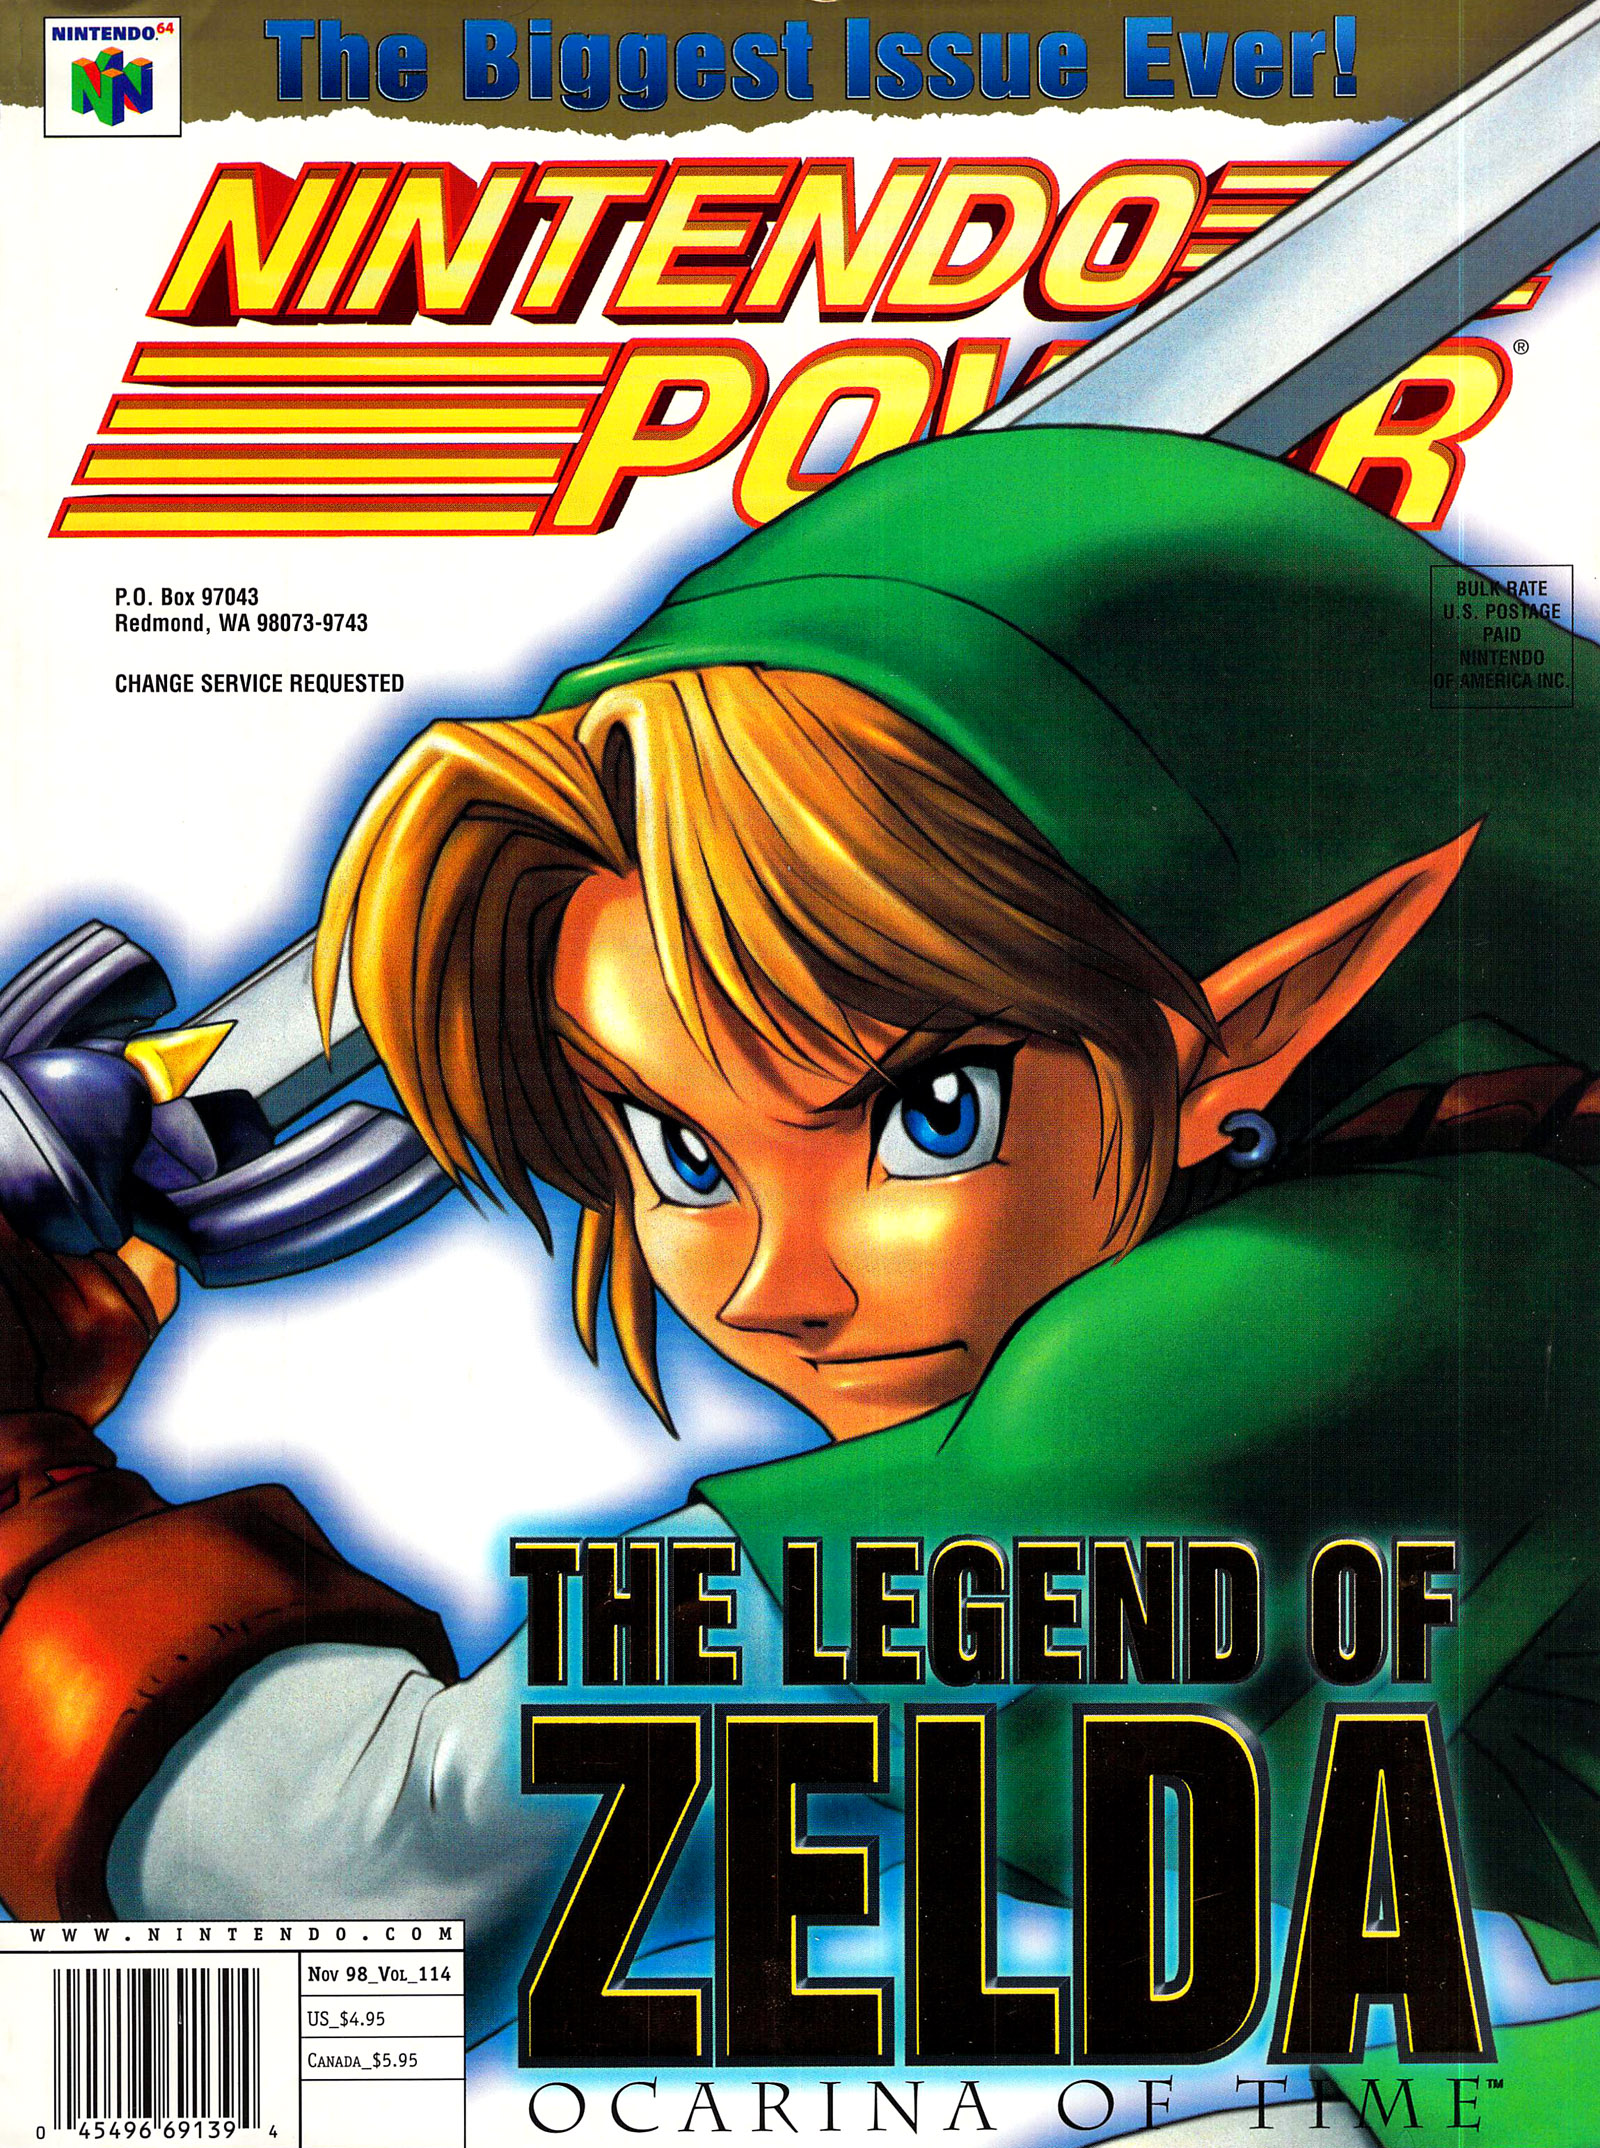 Lost Woods - The Legend of Zelda: Ocarina of Time Guide - IGN